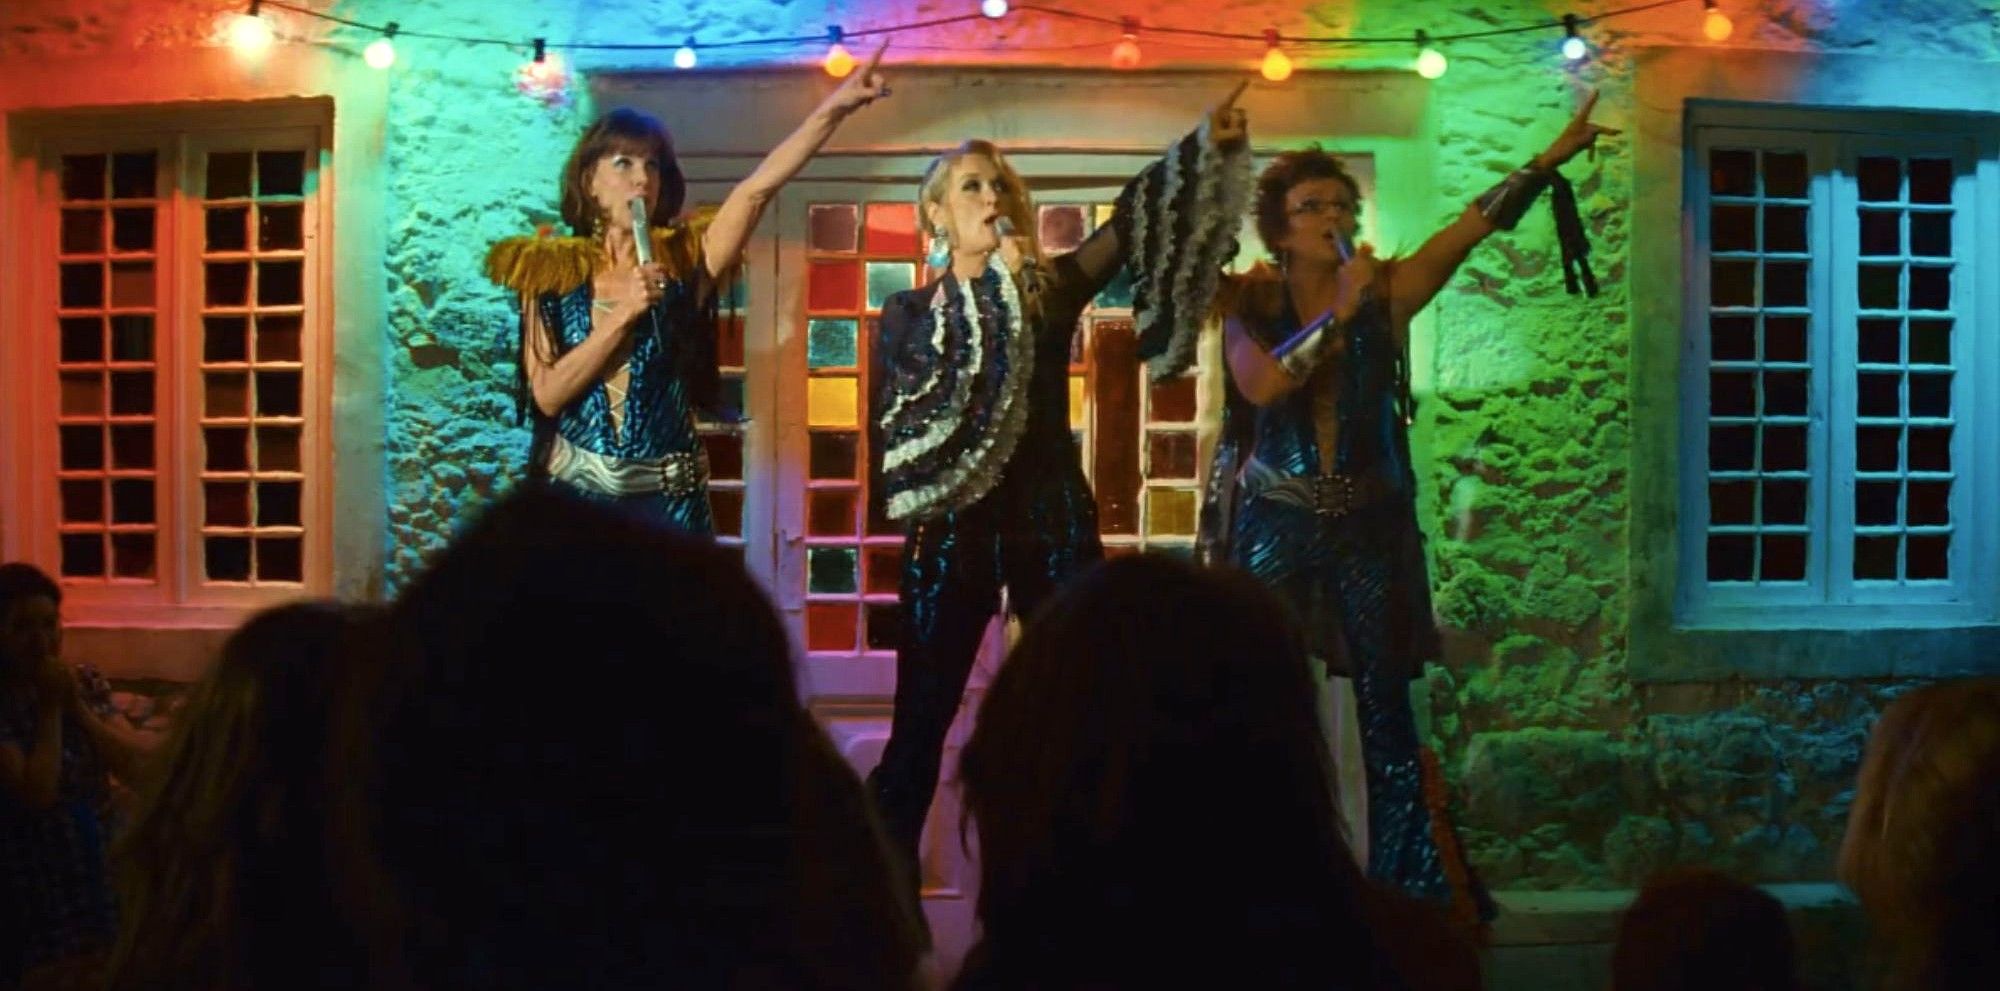 Christine Baranski, Meryl Streep and Julie Walters singing Super Trouper in Mamma Mia!